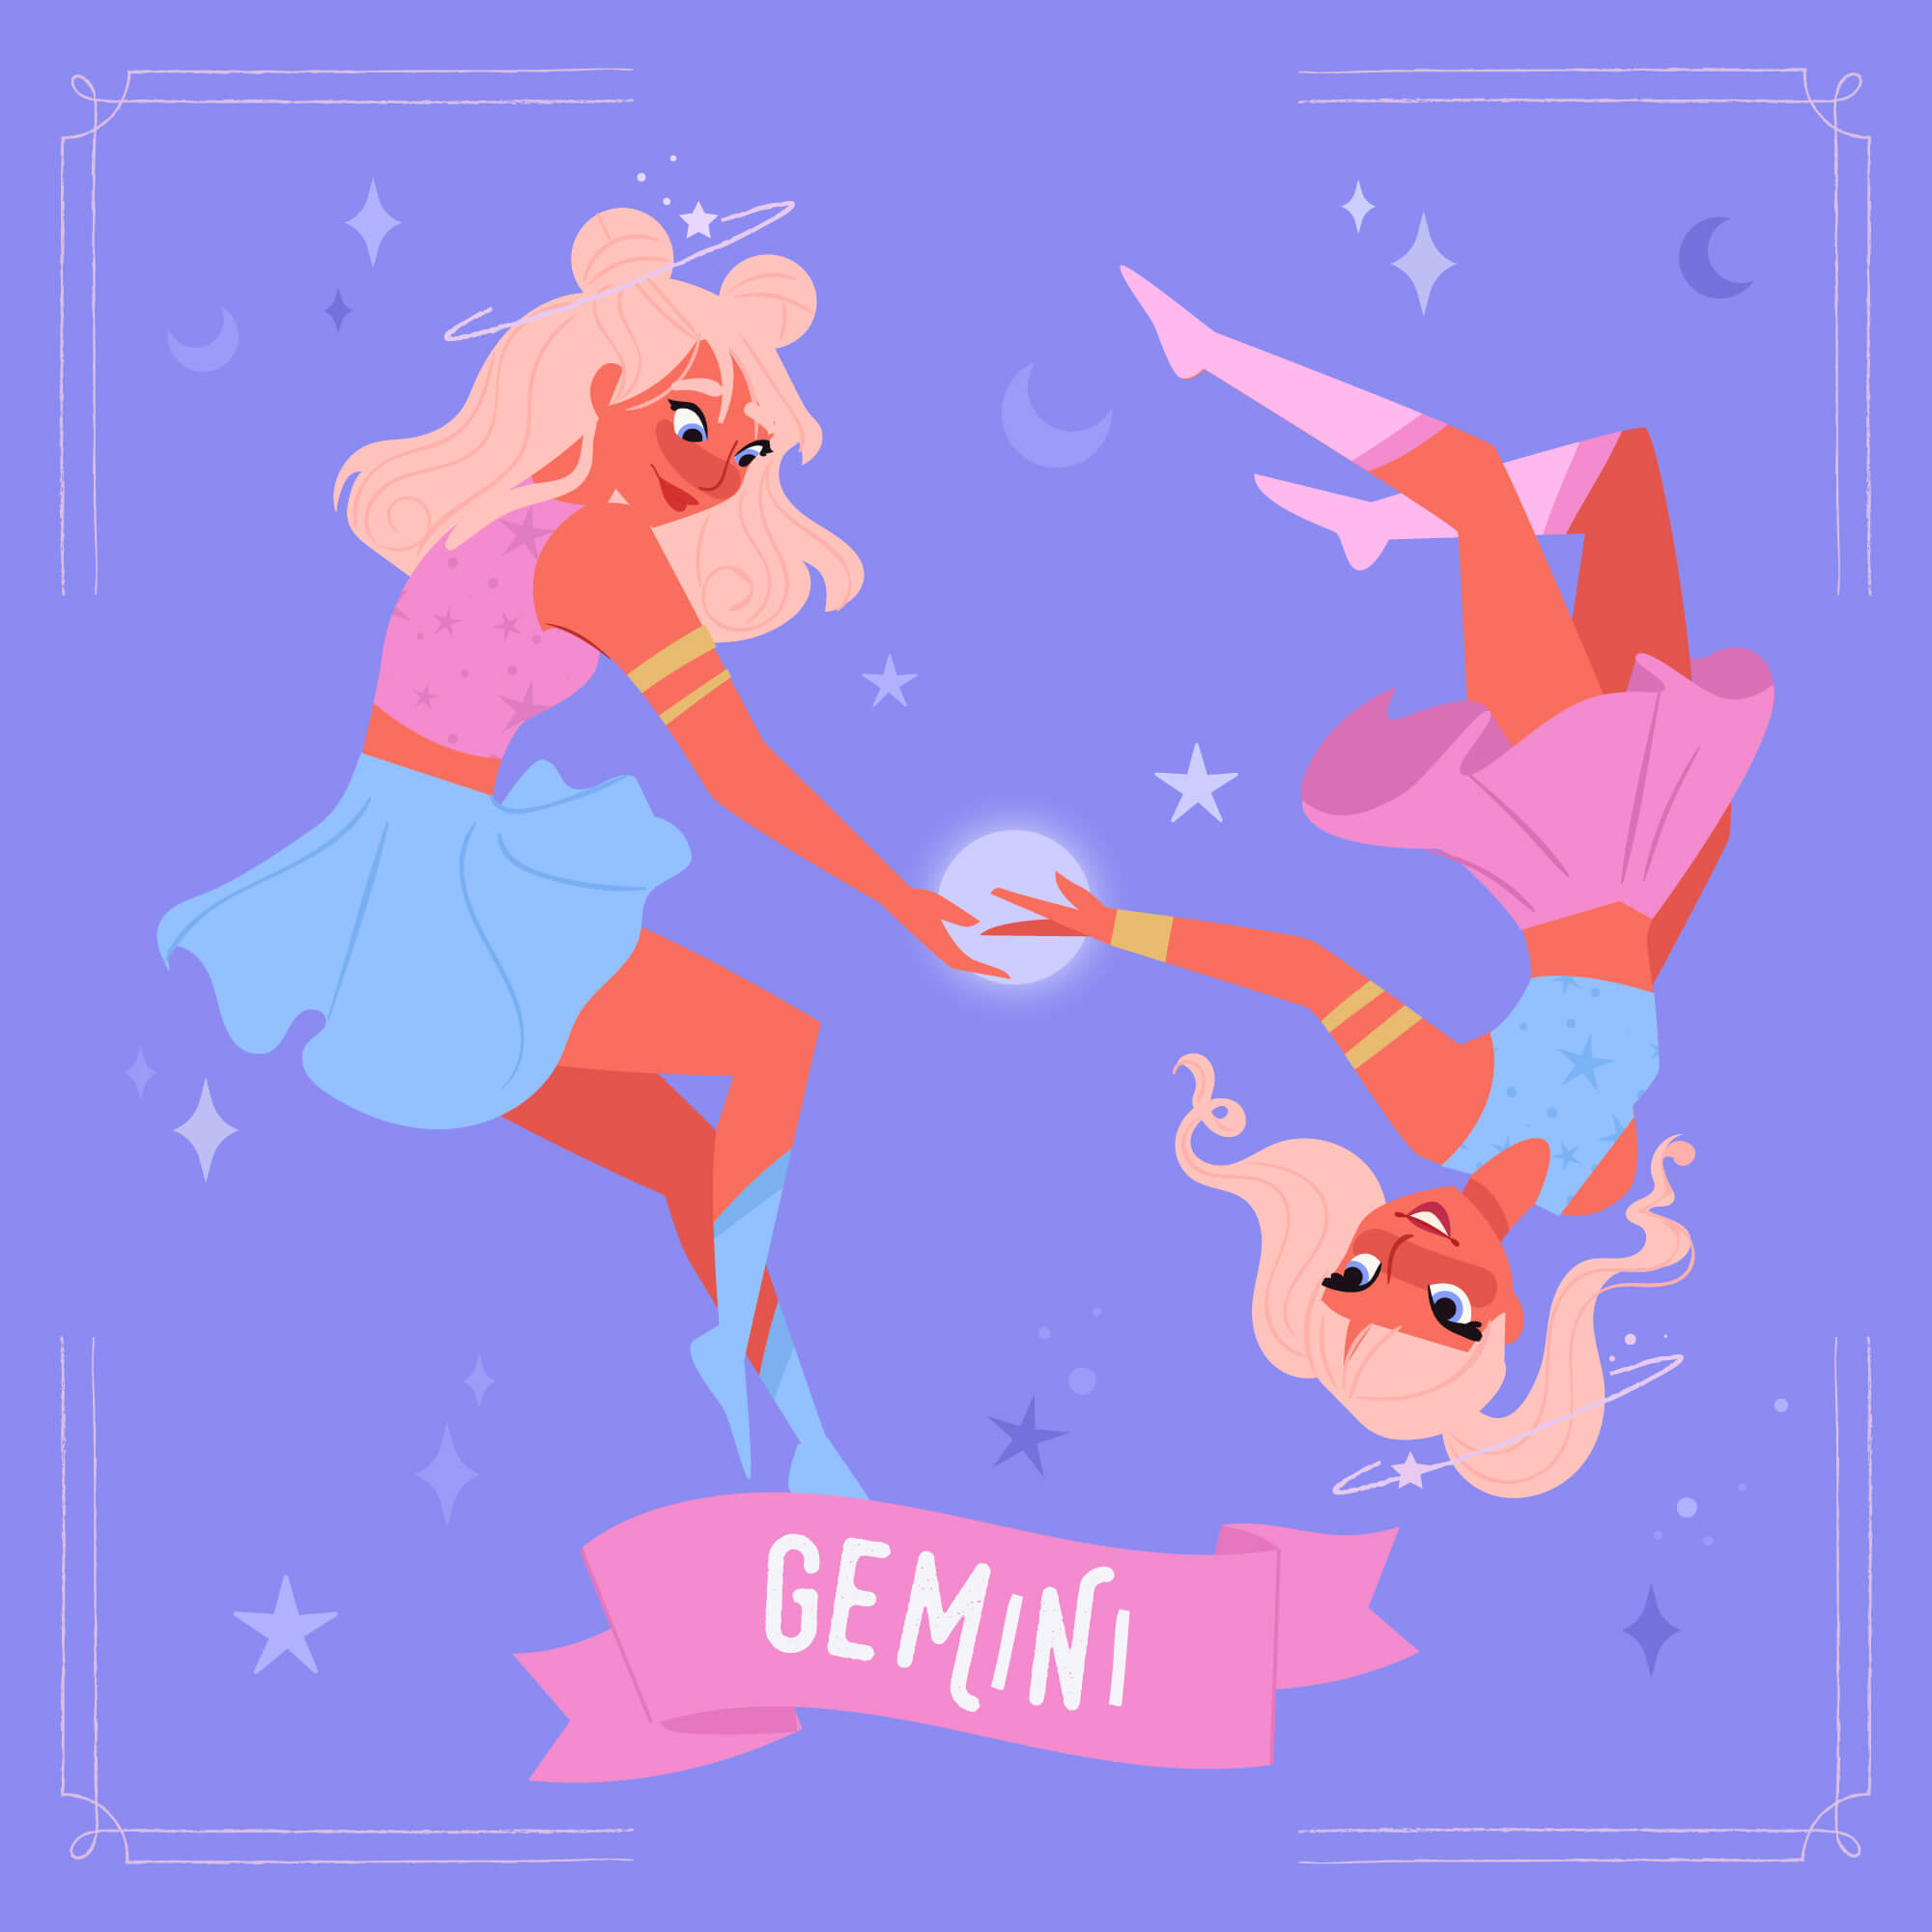 Gemini 쌍둥이자리